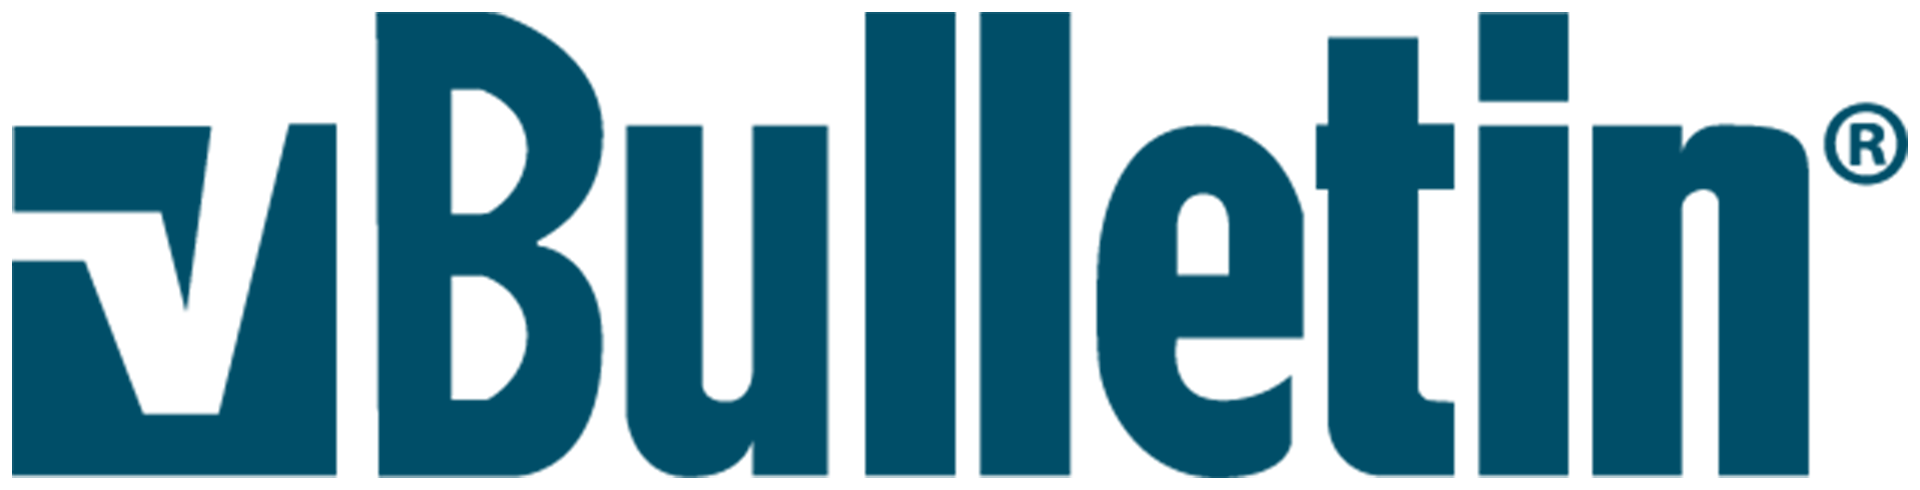 vBulletin Logo